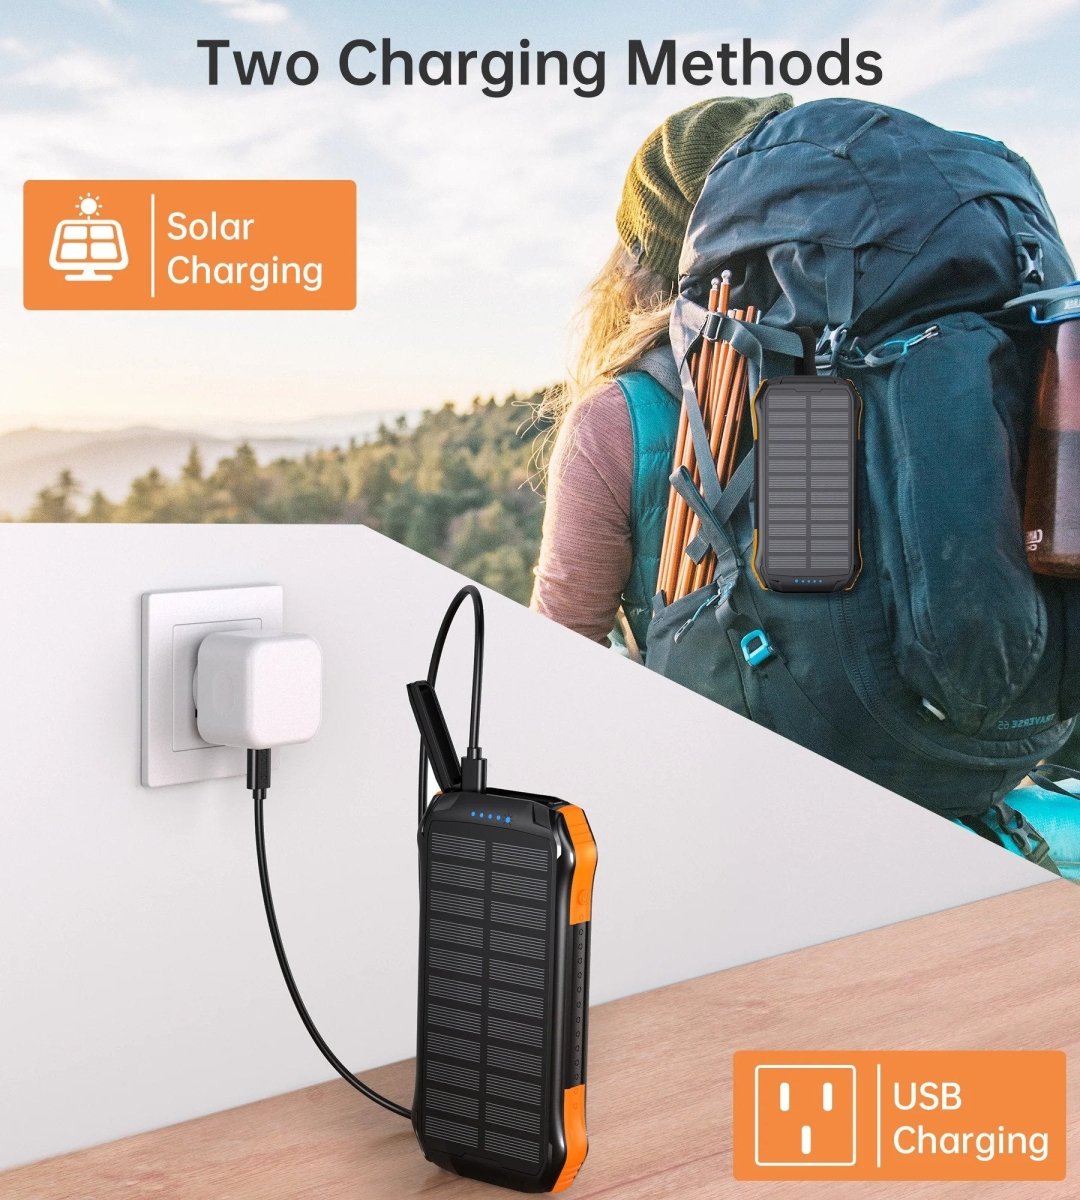 CHOETECH B659 10000mAh Solar Power Bank Wireless Charging Portable Charger